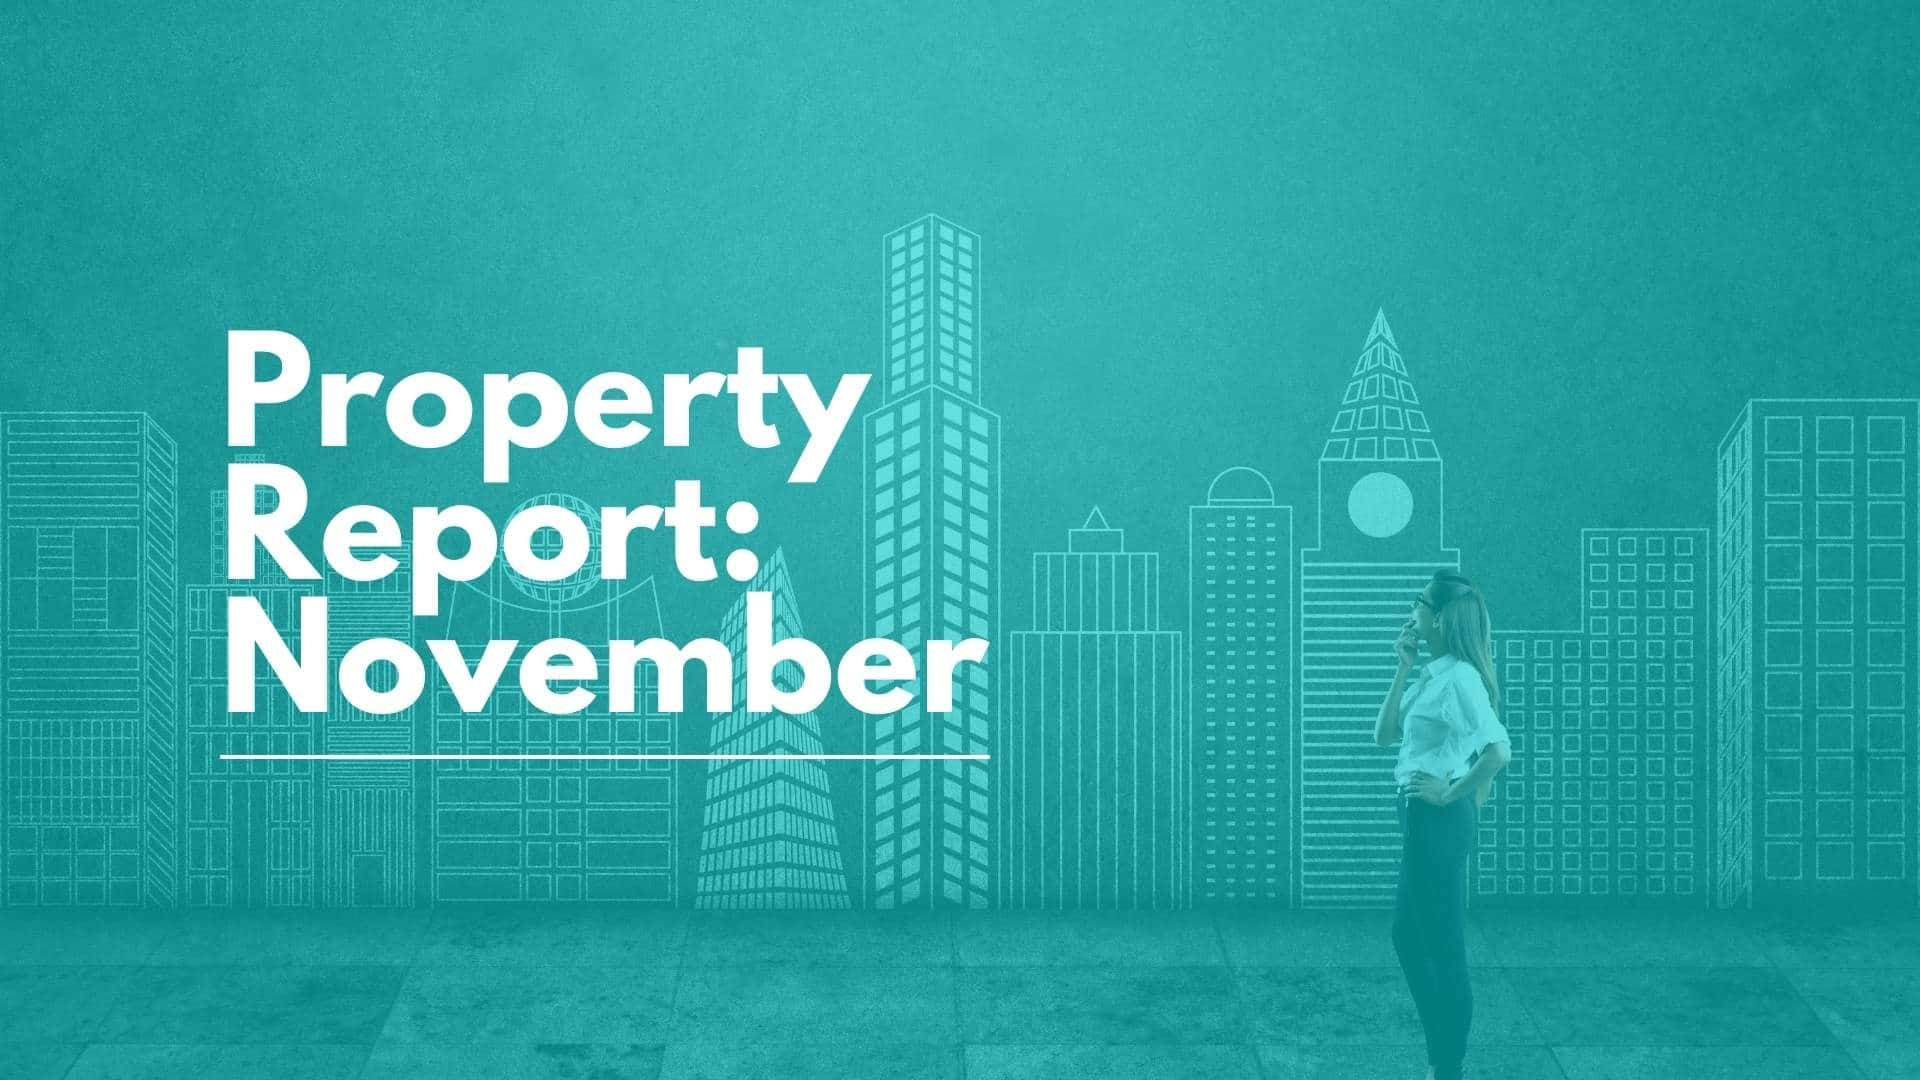 Latest: November’s property market report